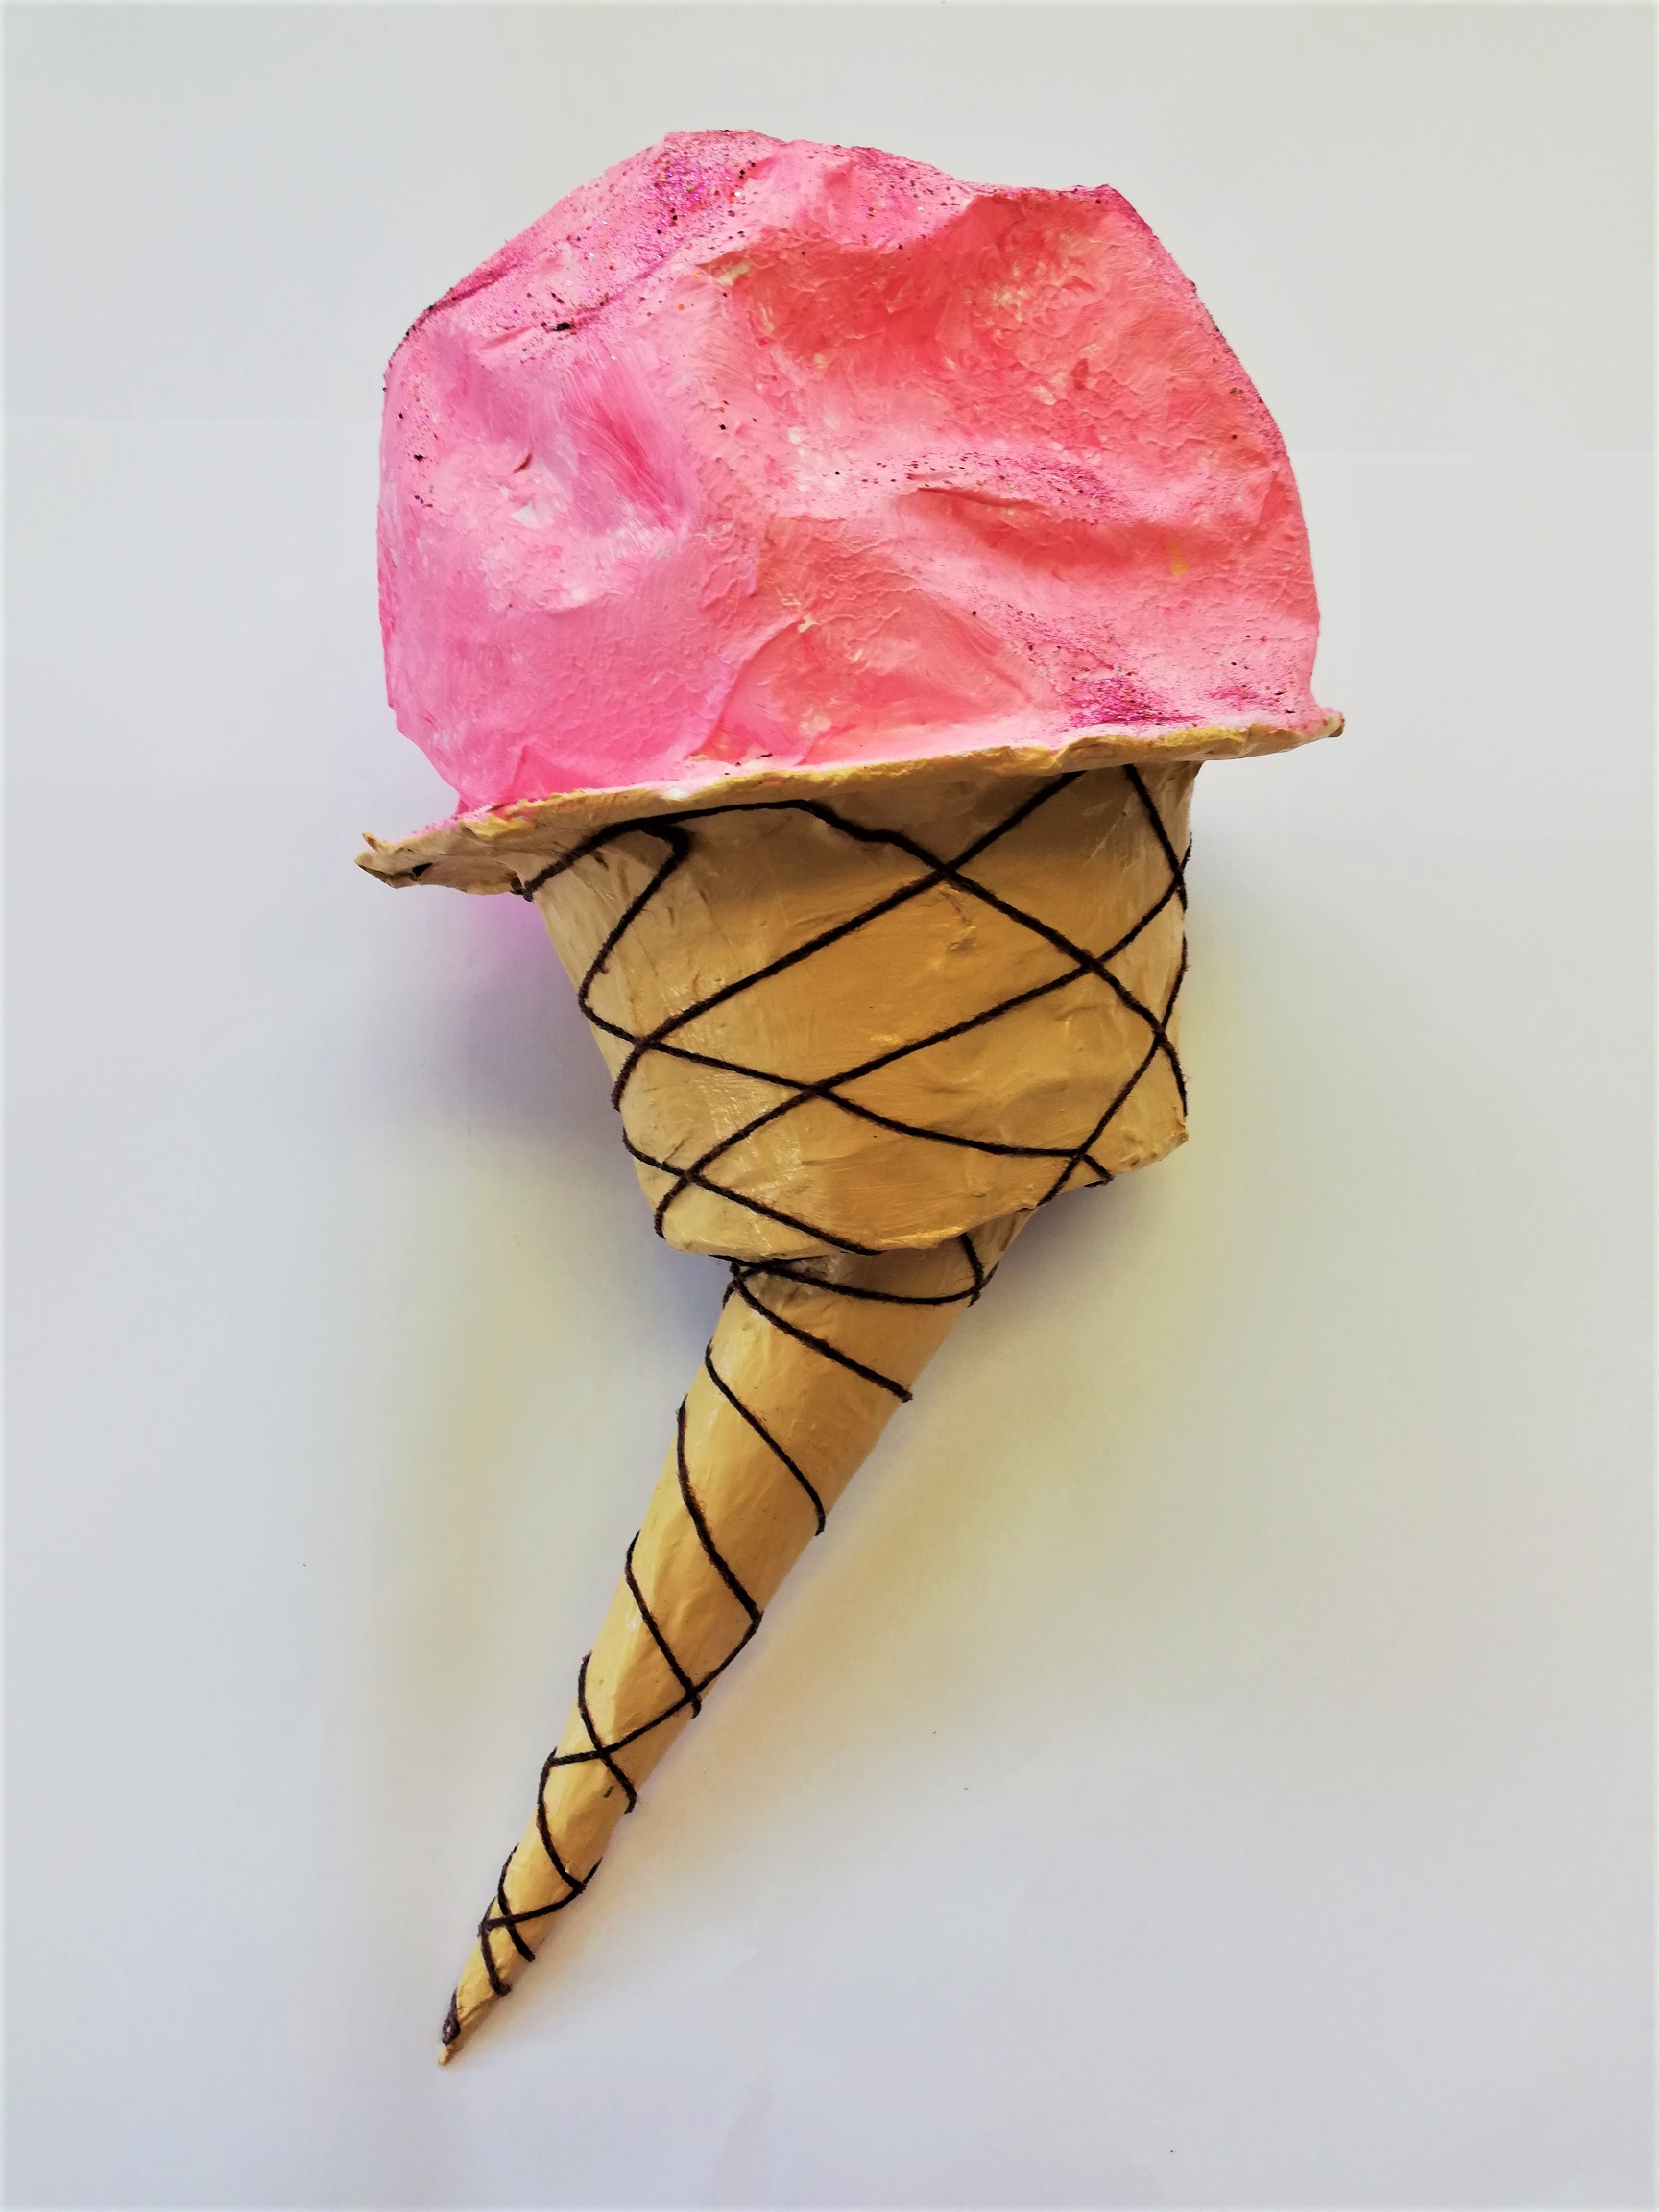 Paul Holmes' ice-cream hat